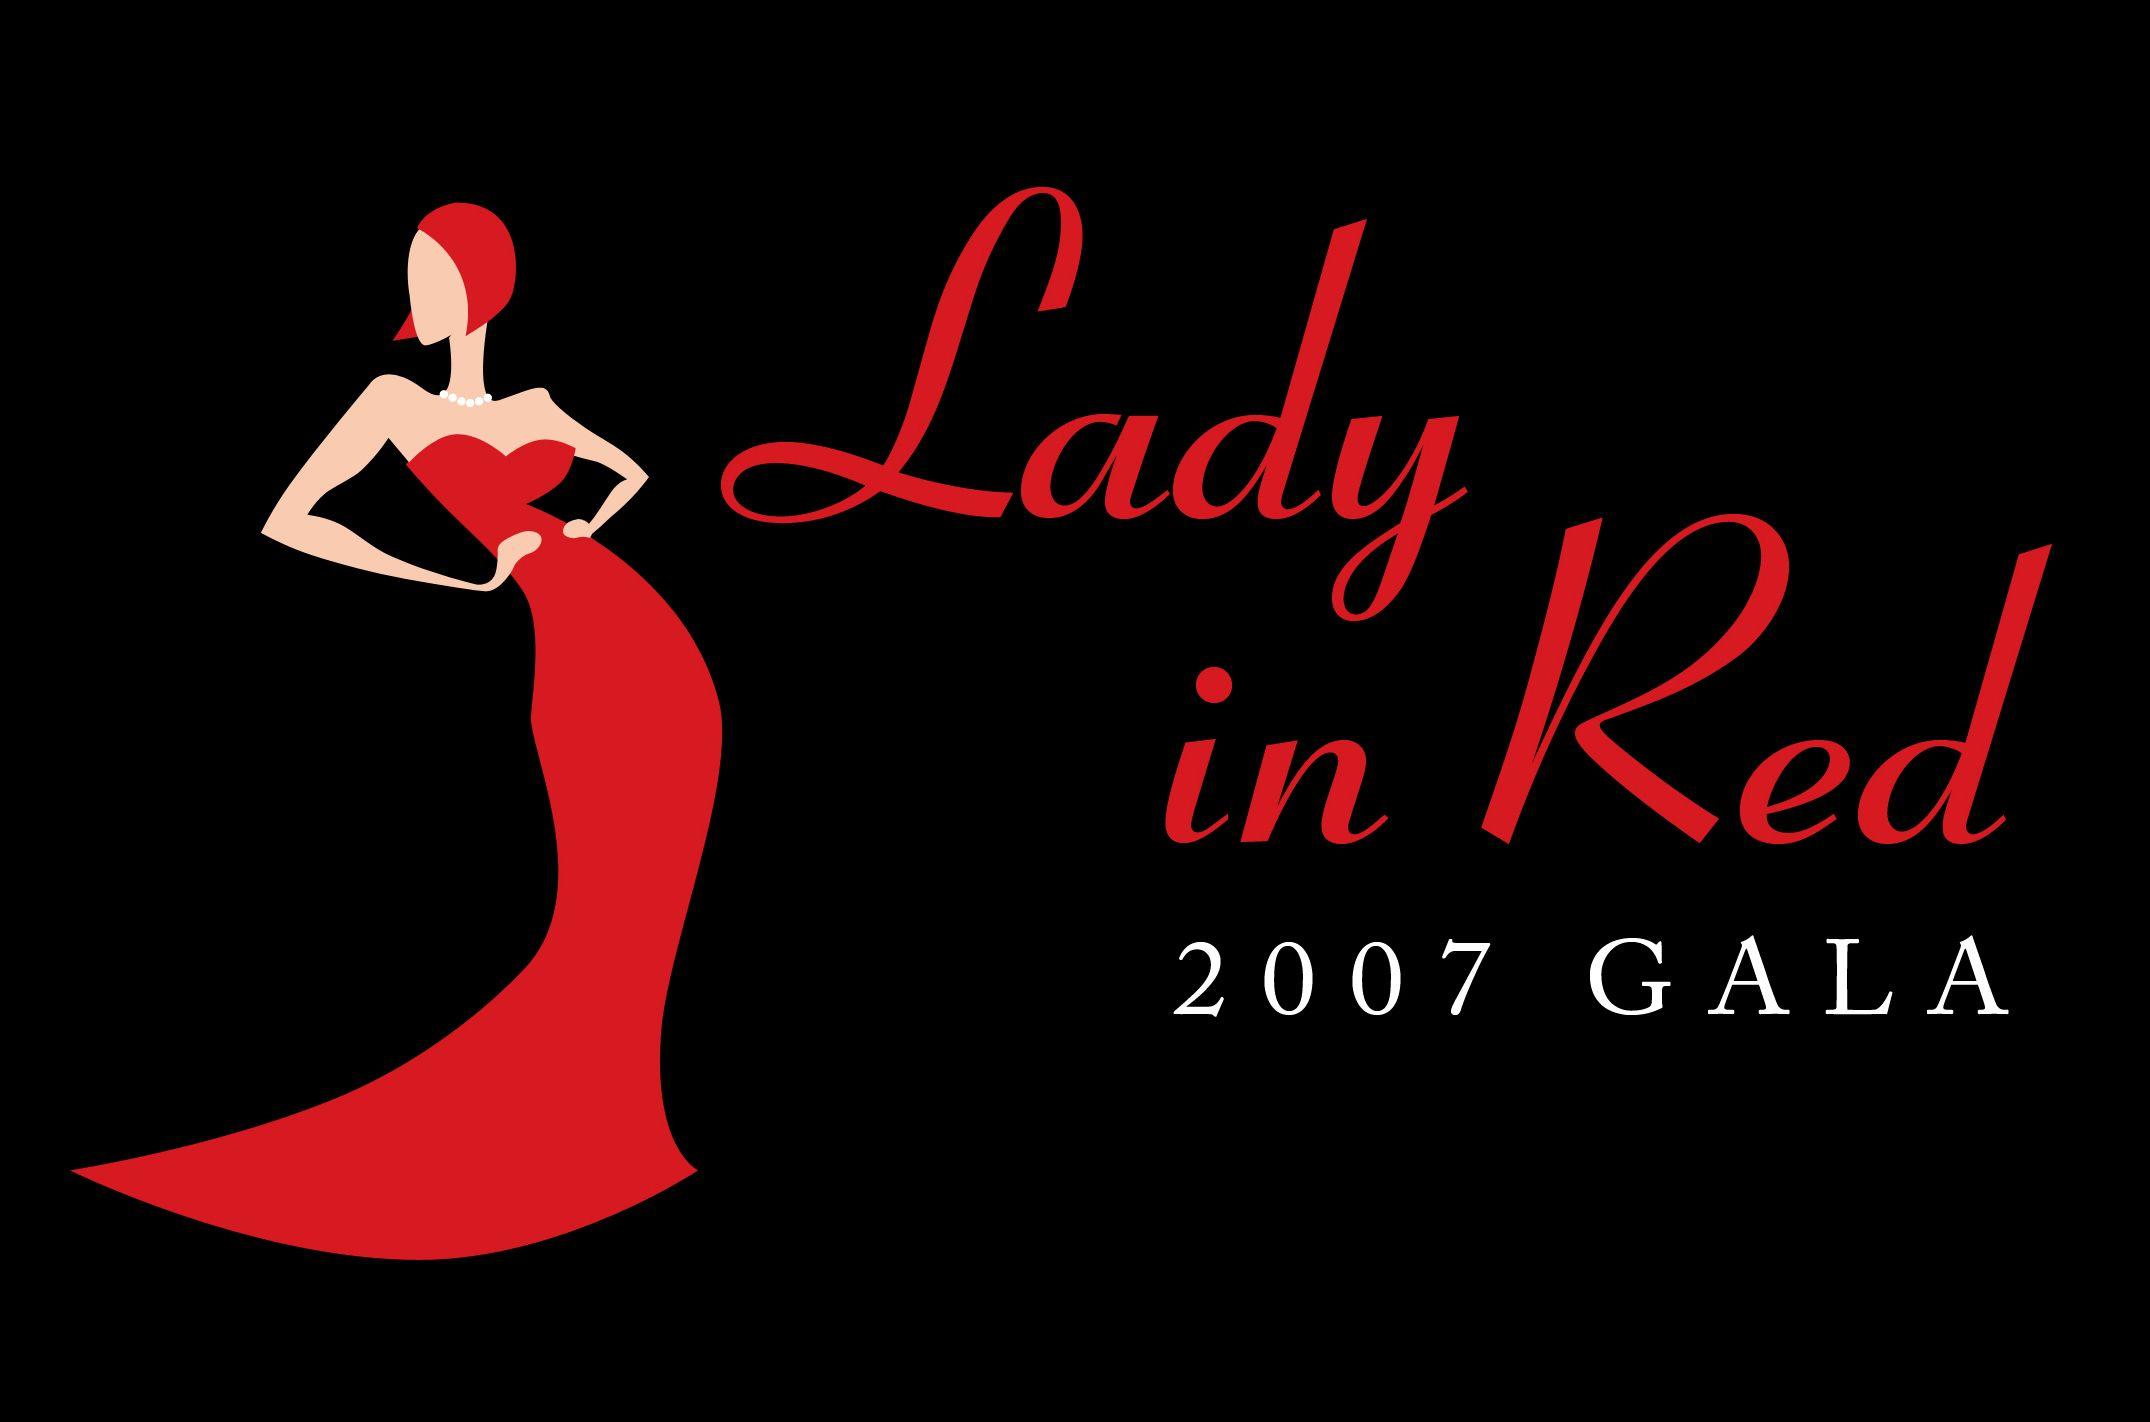 Red Lady Logo - lady logo - Google Search | idea of lady's love logo design | Logo ...